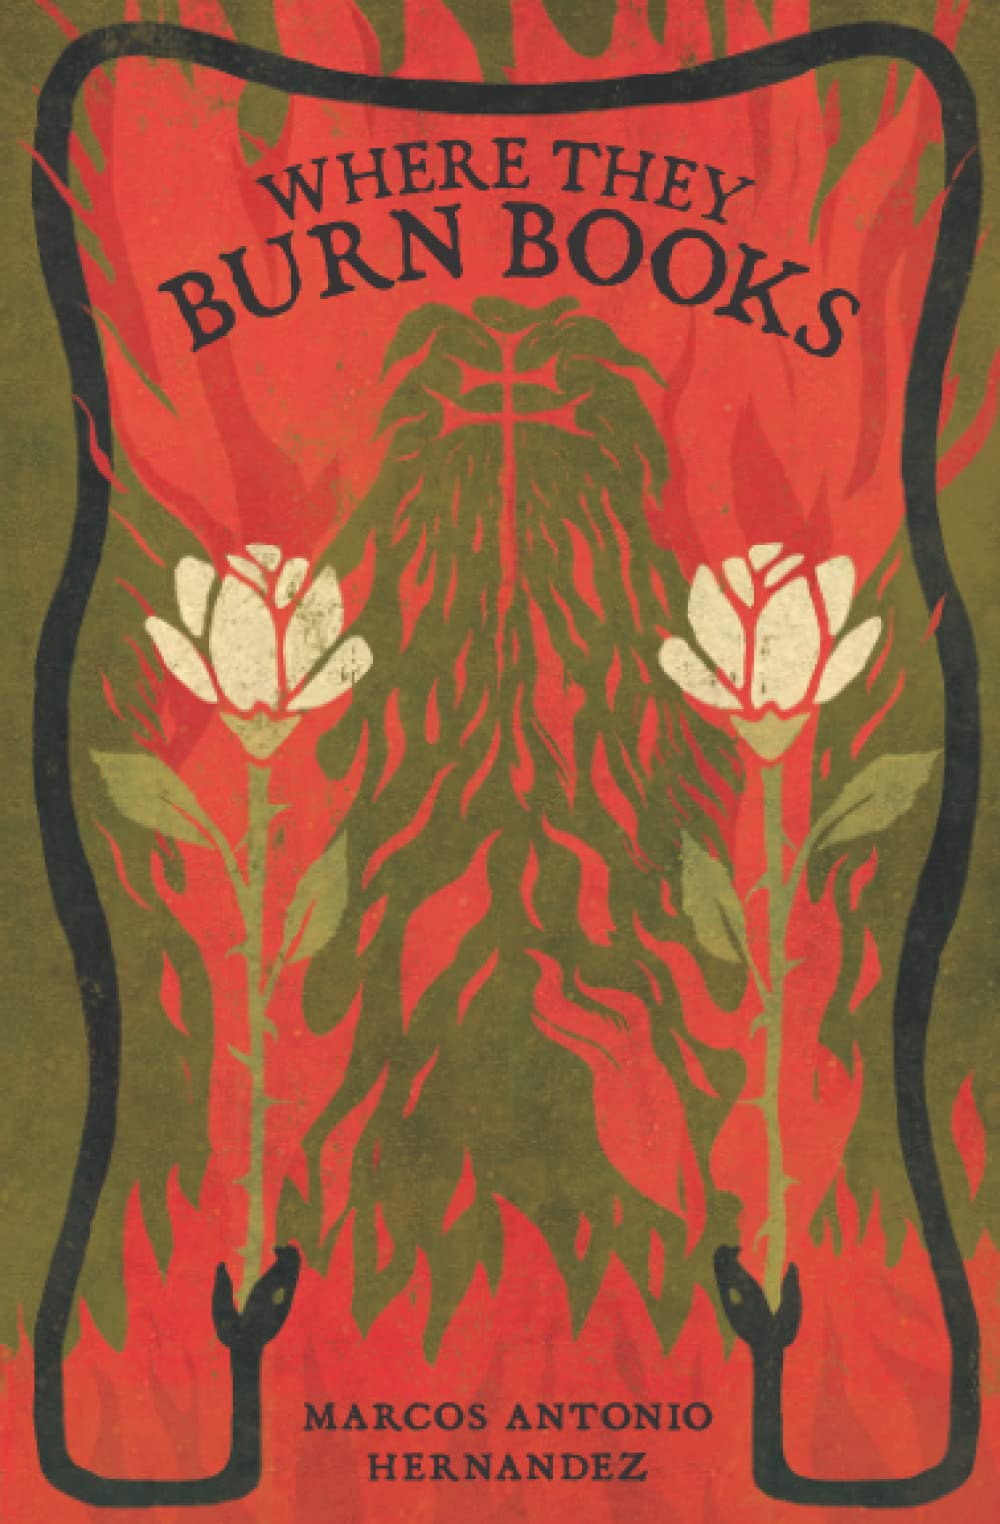 Where They Burn Books (Hispanic American Heritage Stories - Paperback Variant #2)